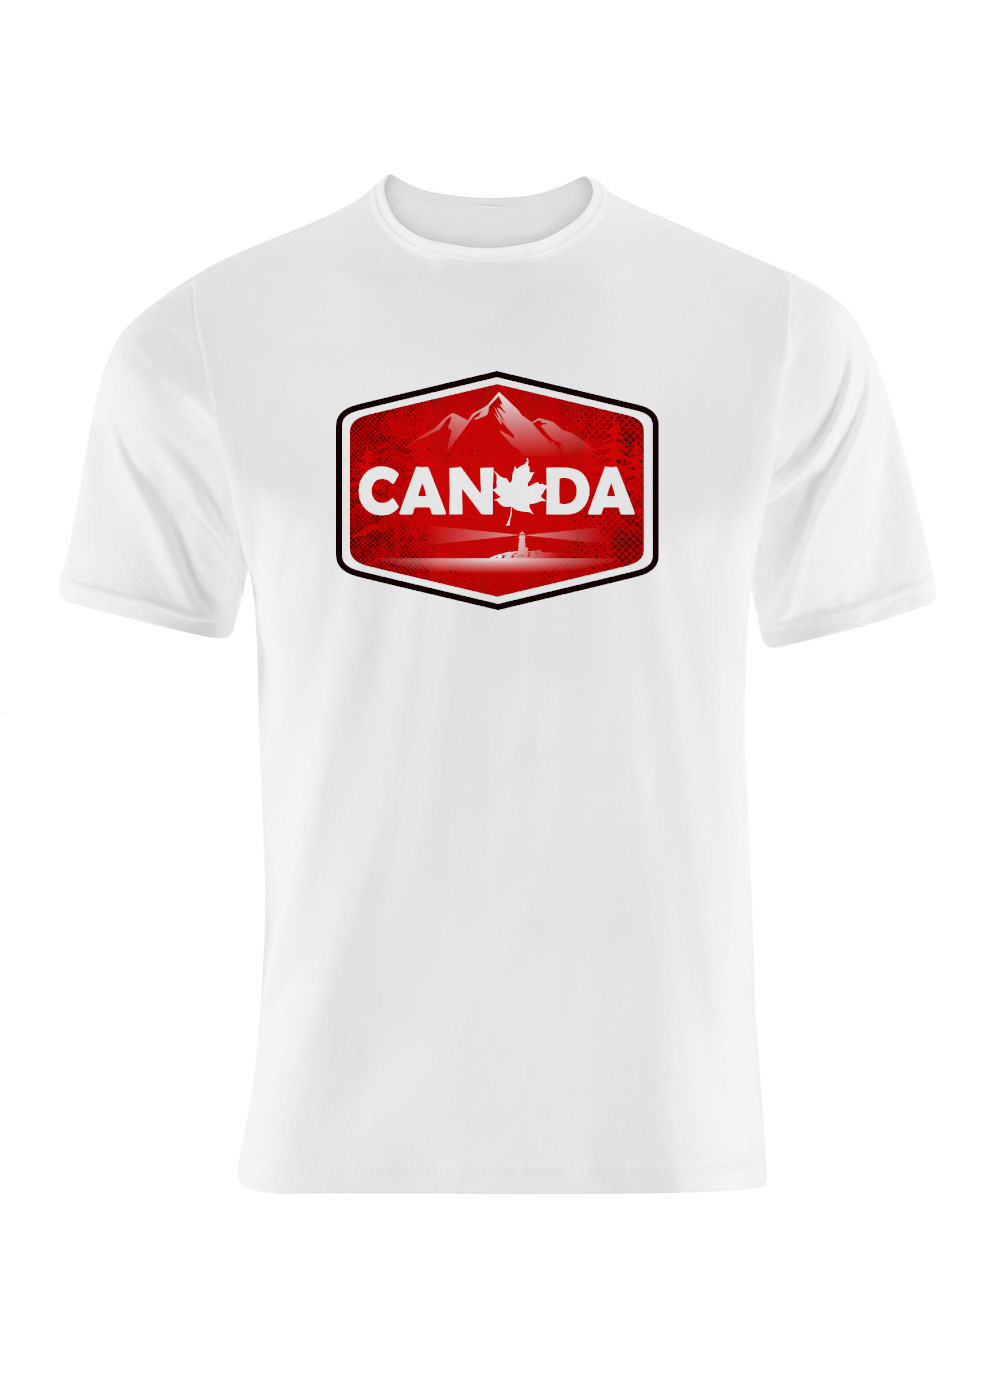 Canada Coast to Coast Graphic T Shirt